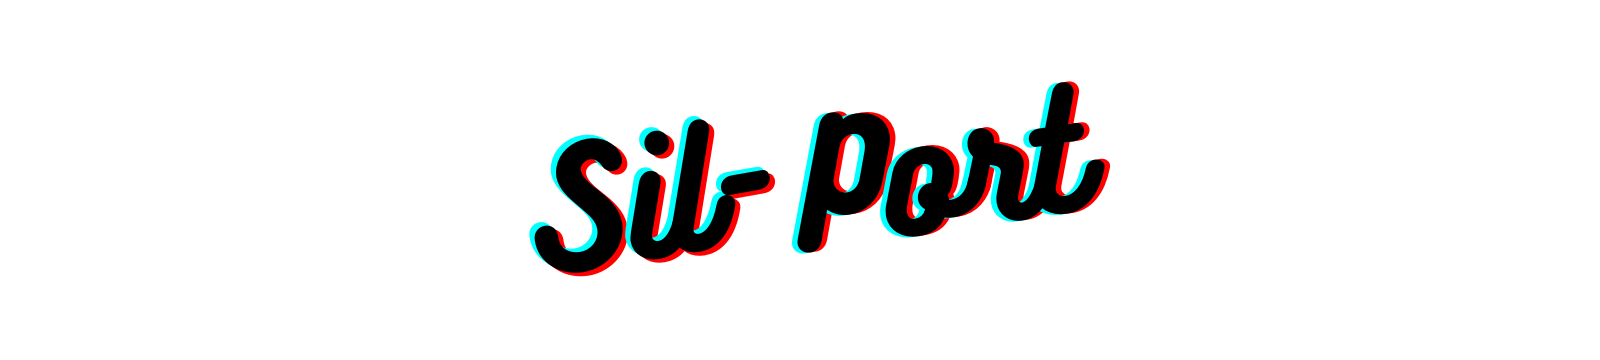 sil-port